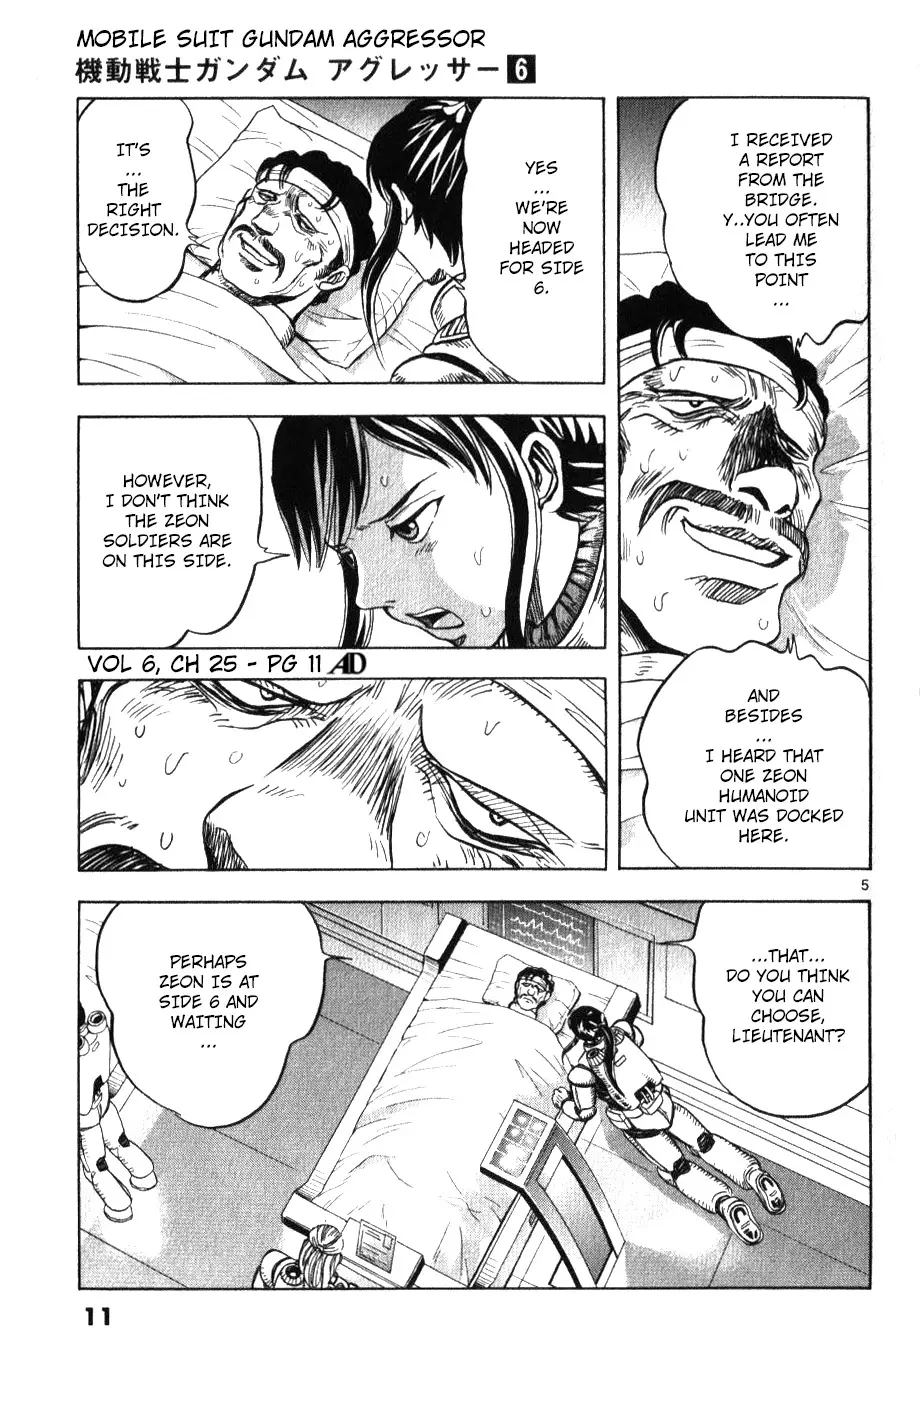 Mobile Suit Gundam Aggressor - 25 page 5-7f5ba1b3